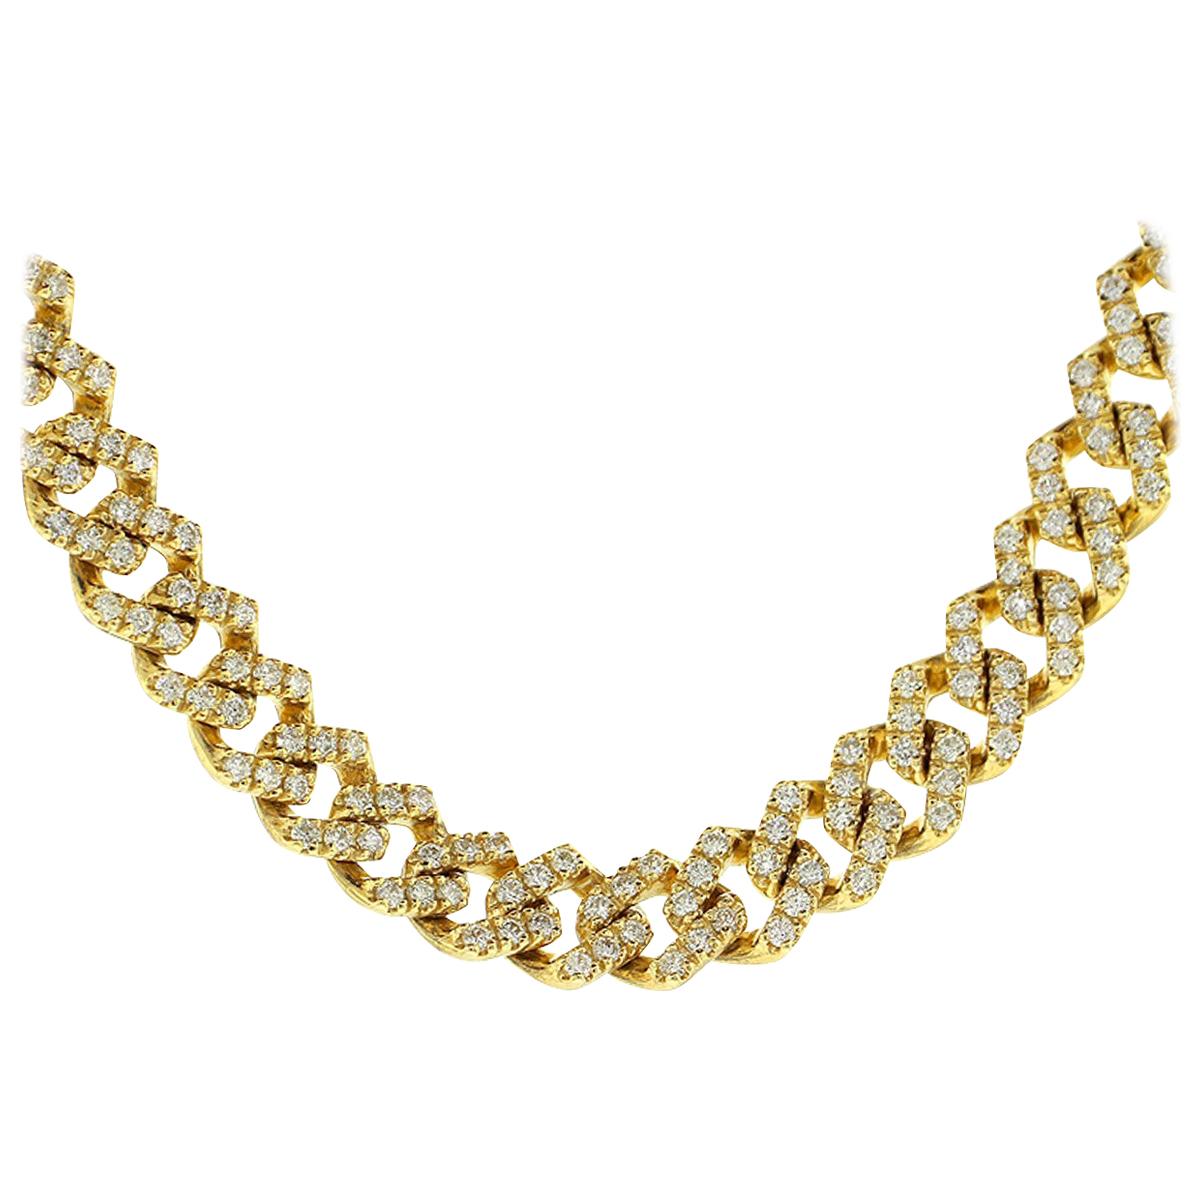 13.74 Carat Diamond Pave Cuban Link Chain Necklace 14 Karat in Stock For Sale